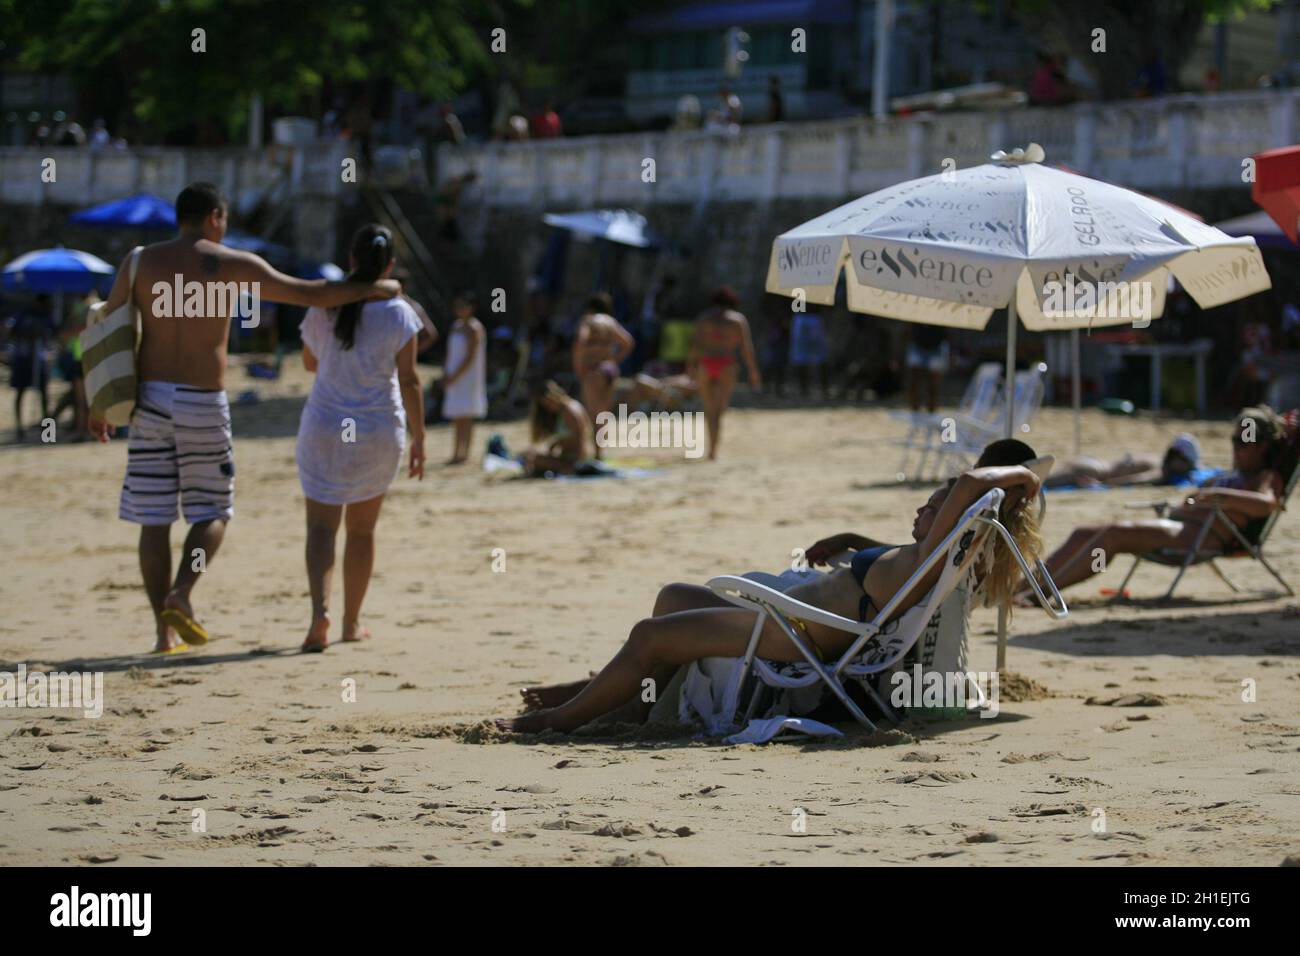 salvador, bahia / brazil - april 22, 2014: People are seen at Porto da Barra beach in Salvador city. *** Local Caption *** Stock Photo